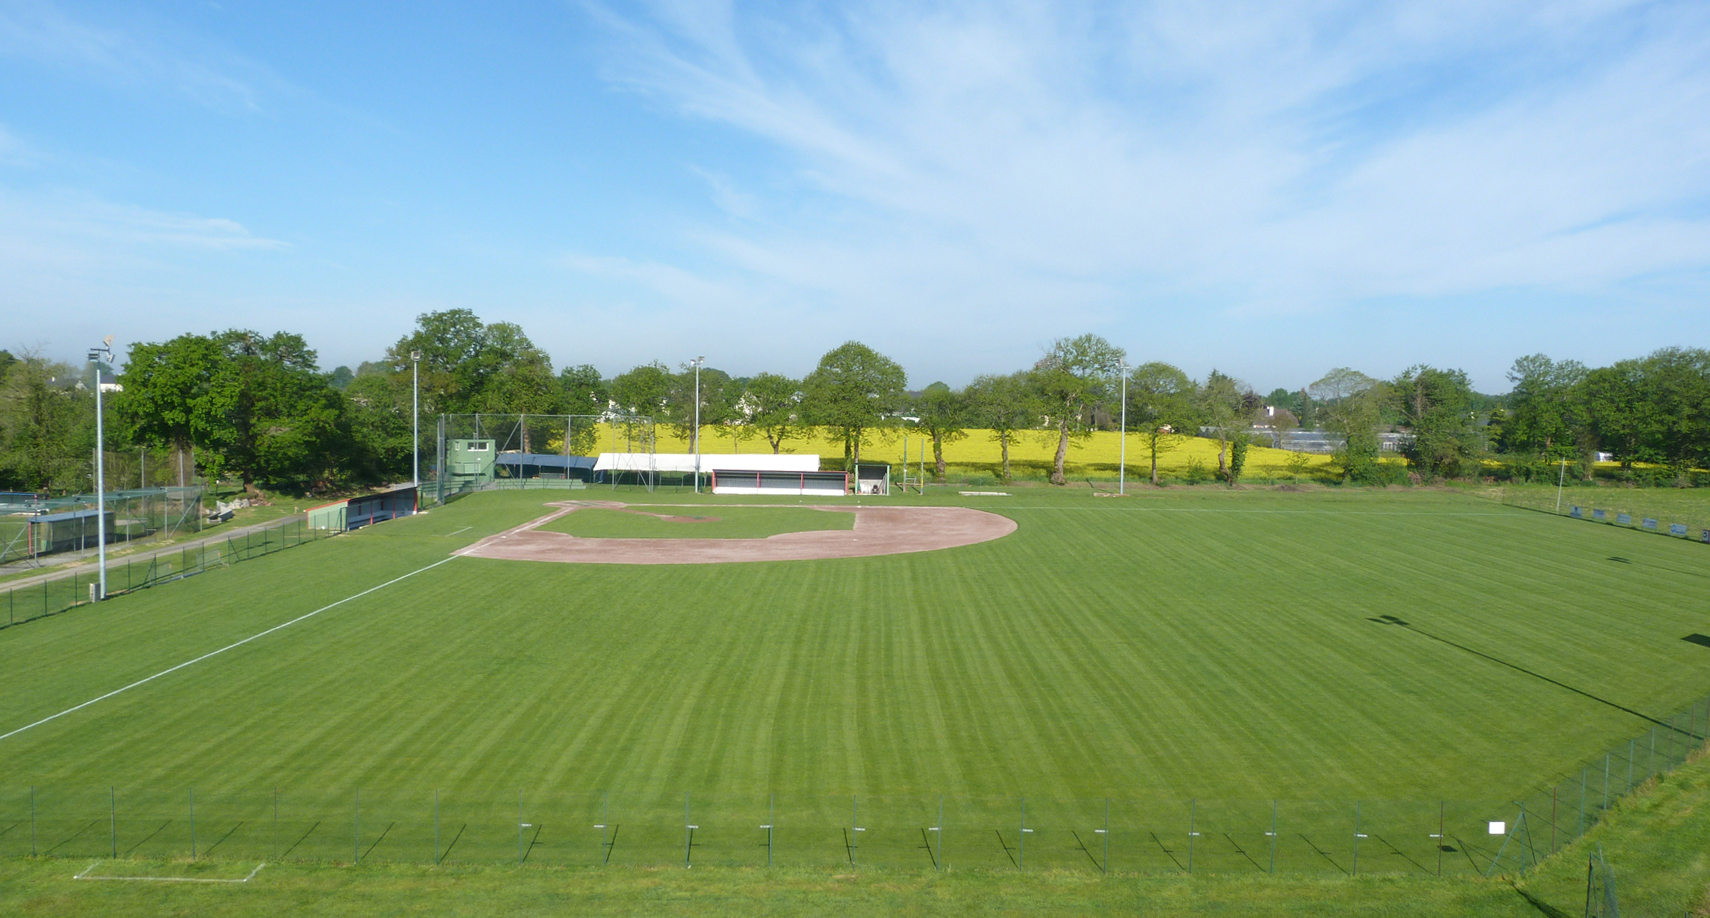 Hawks Baseball Park